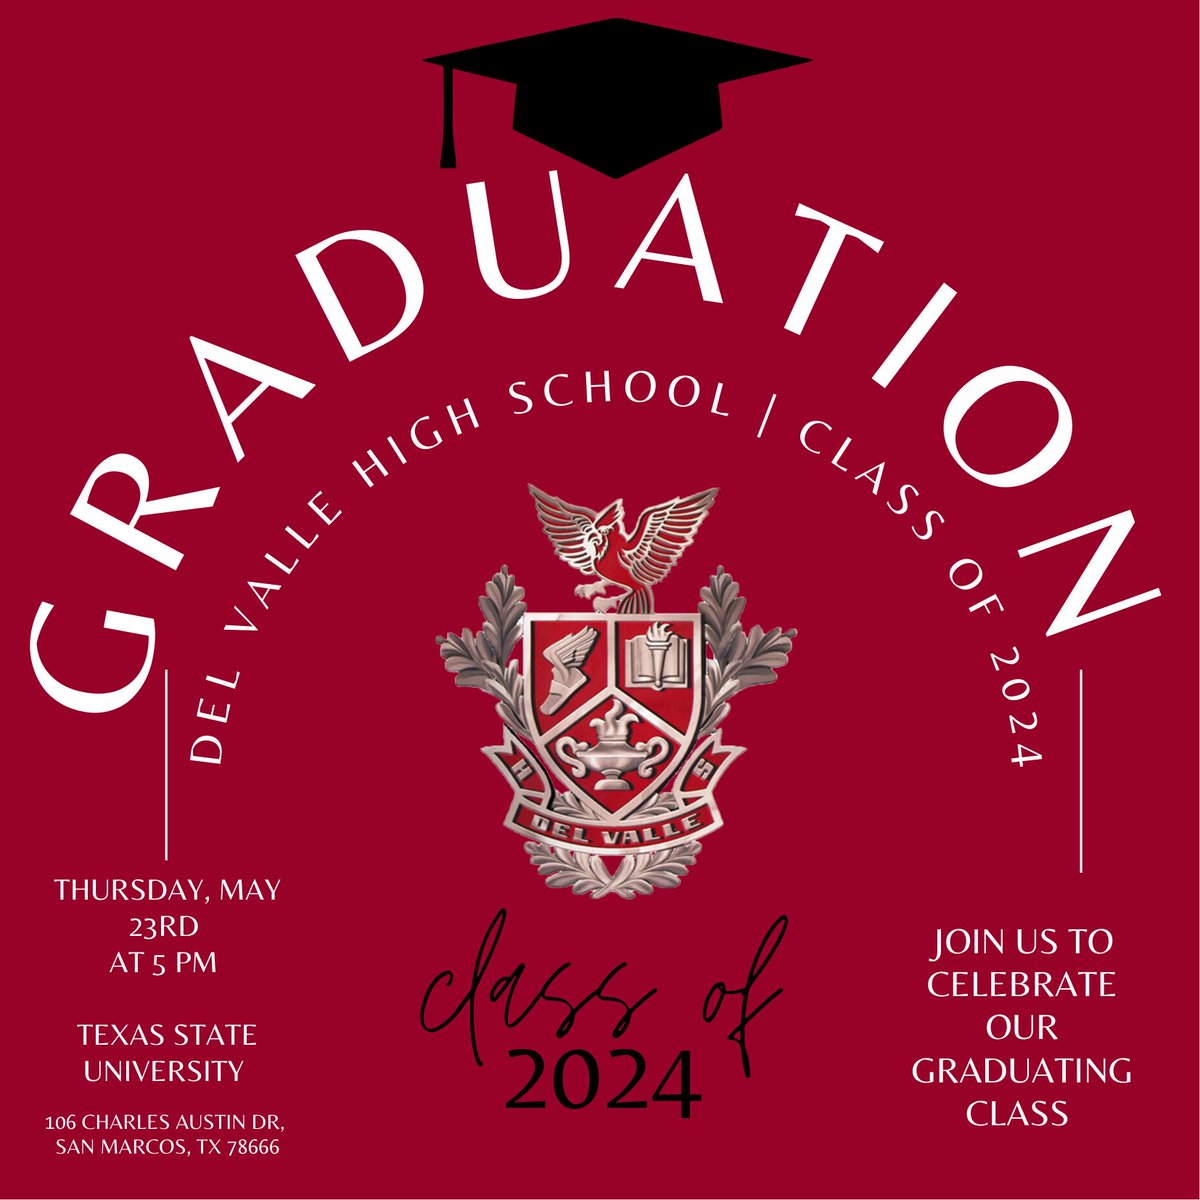 Congratulation Class of 2024!🎓